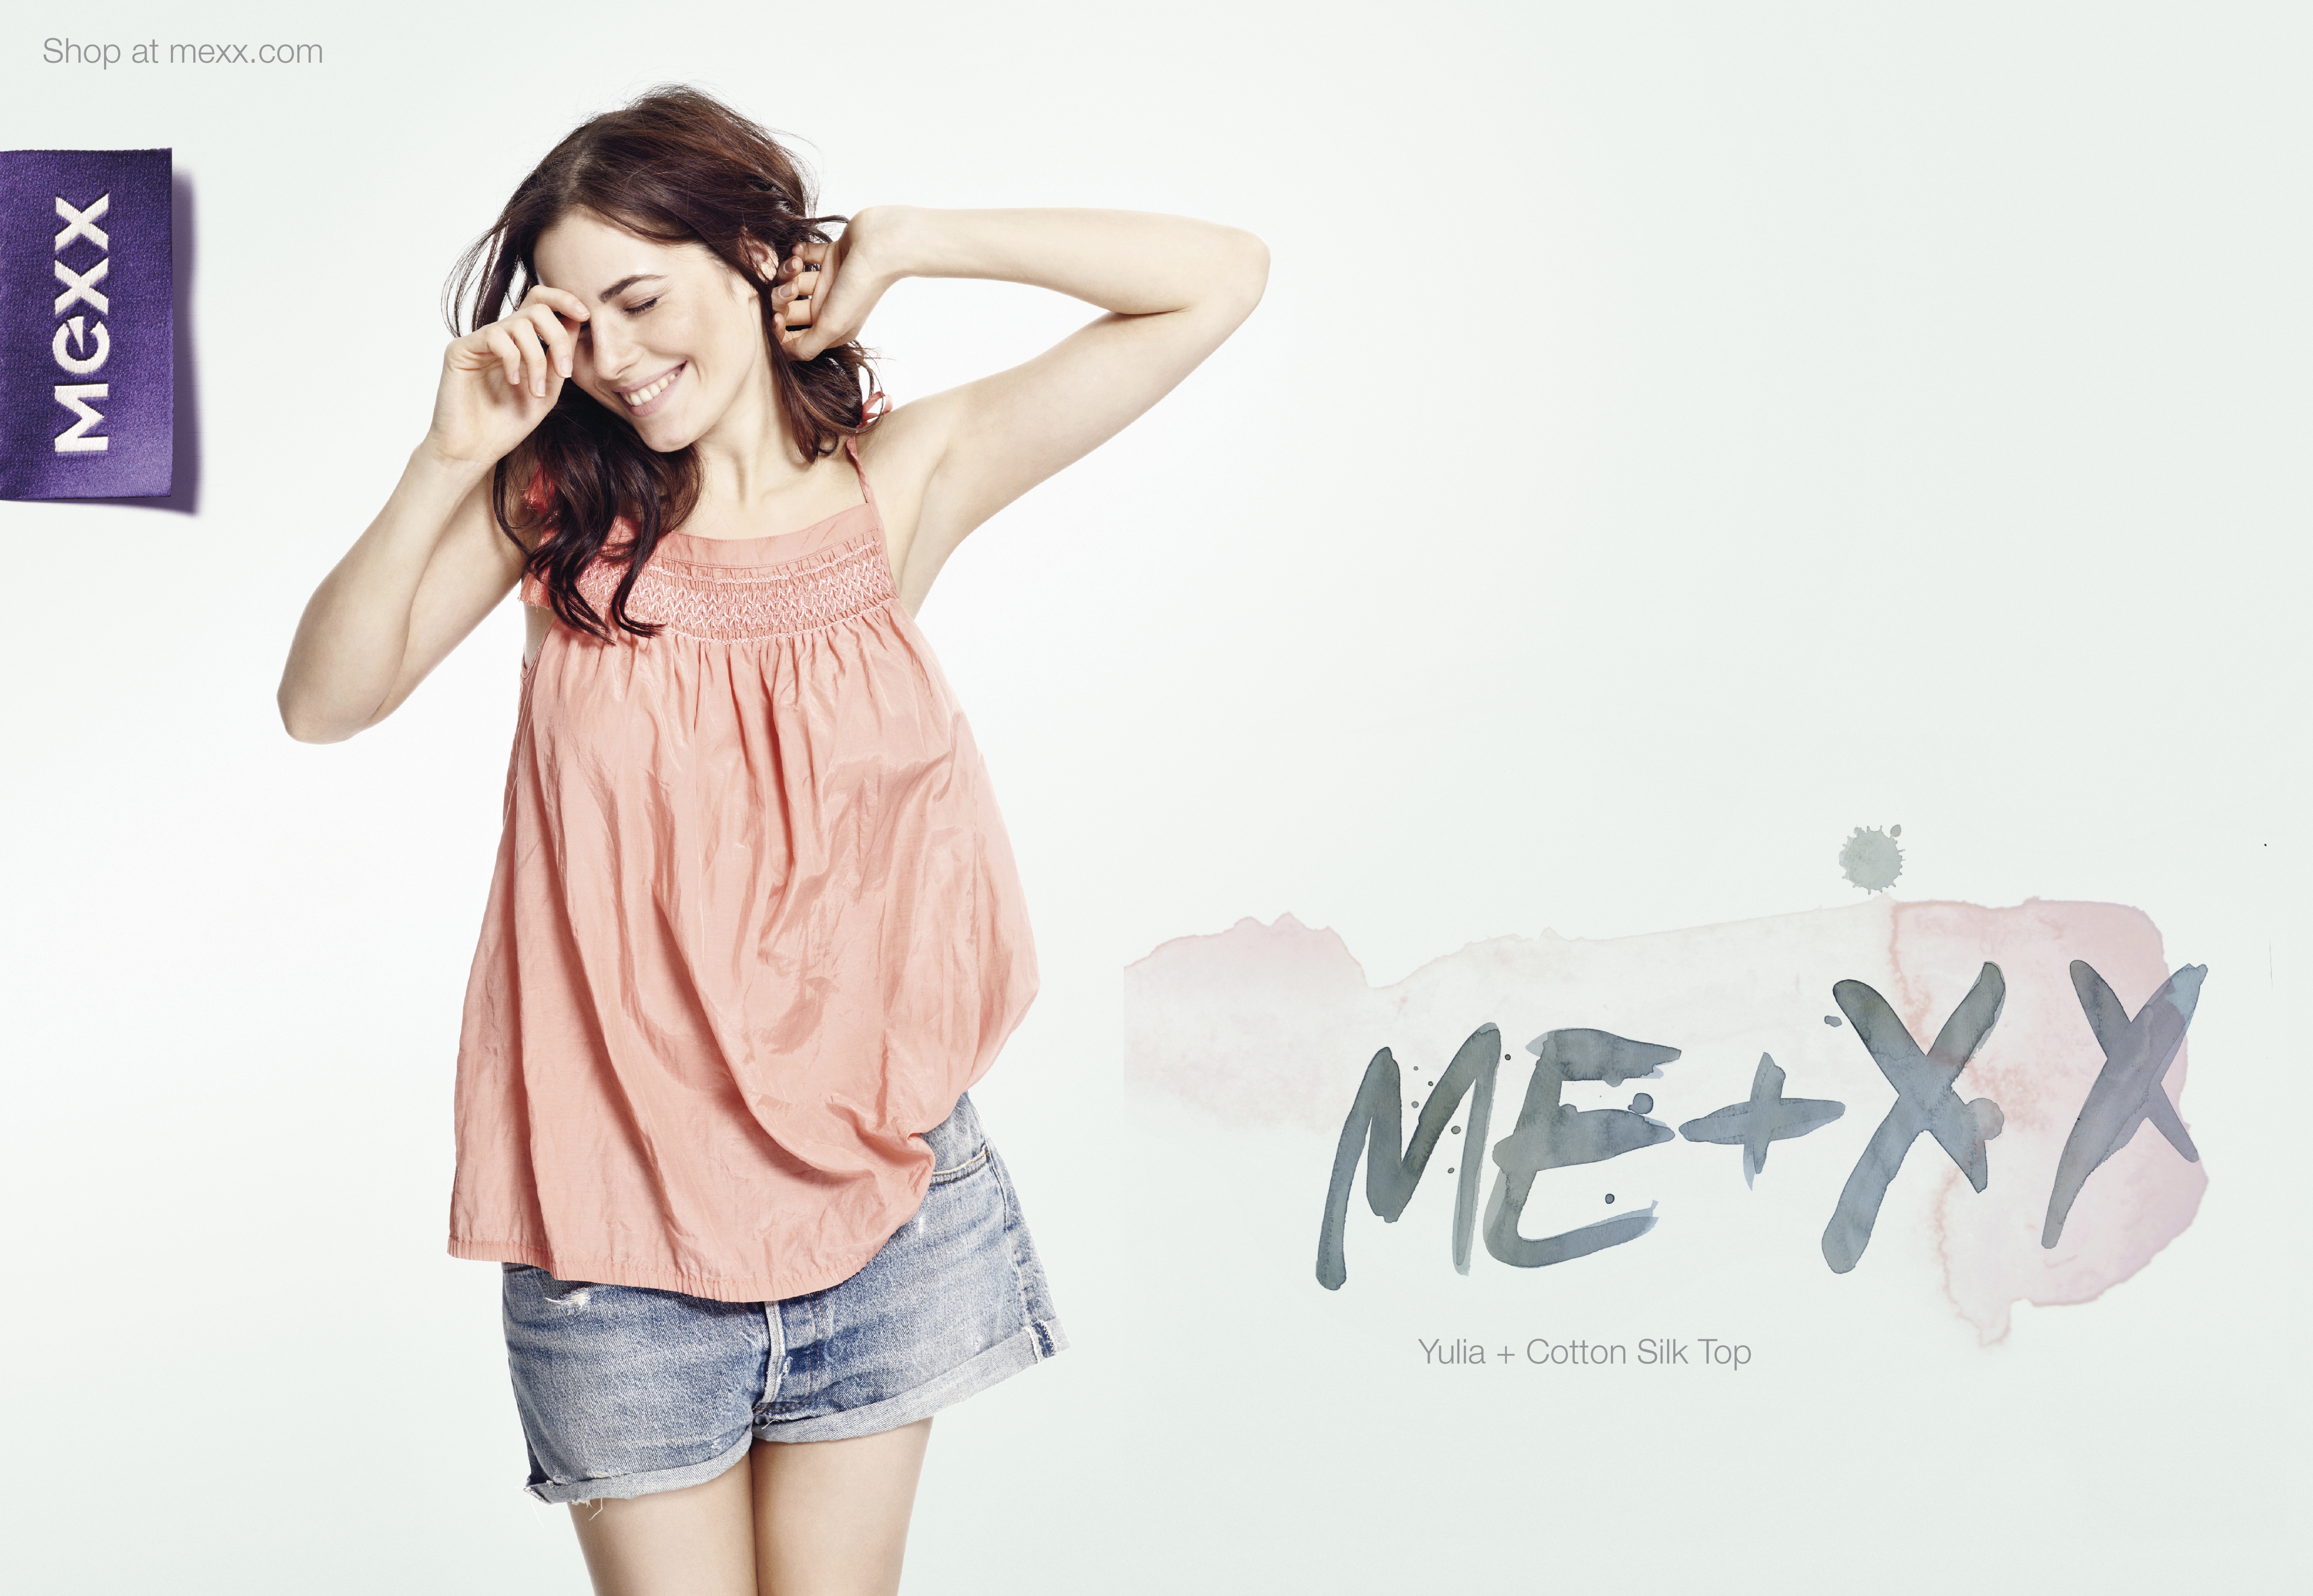 Mexx Me XX SS 2011 Campaign 3